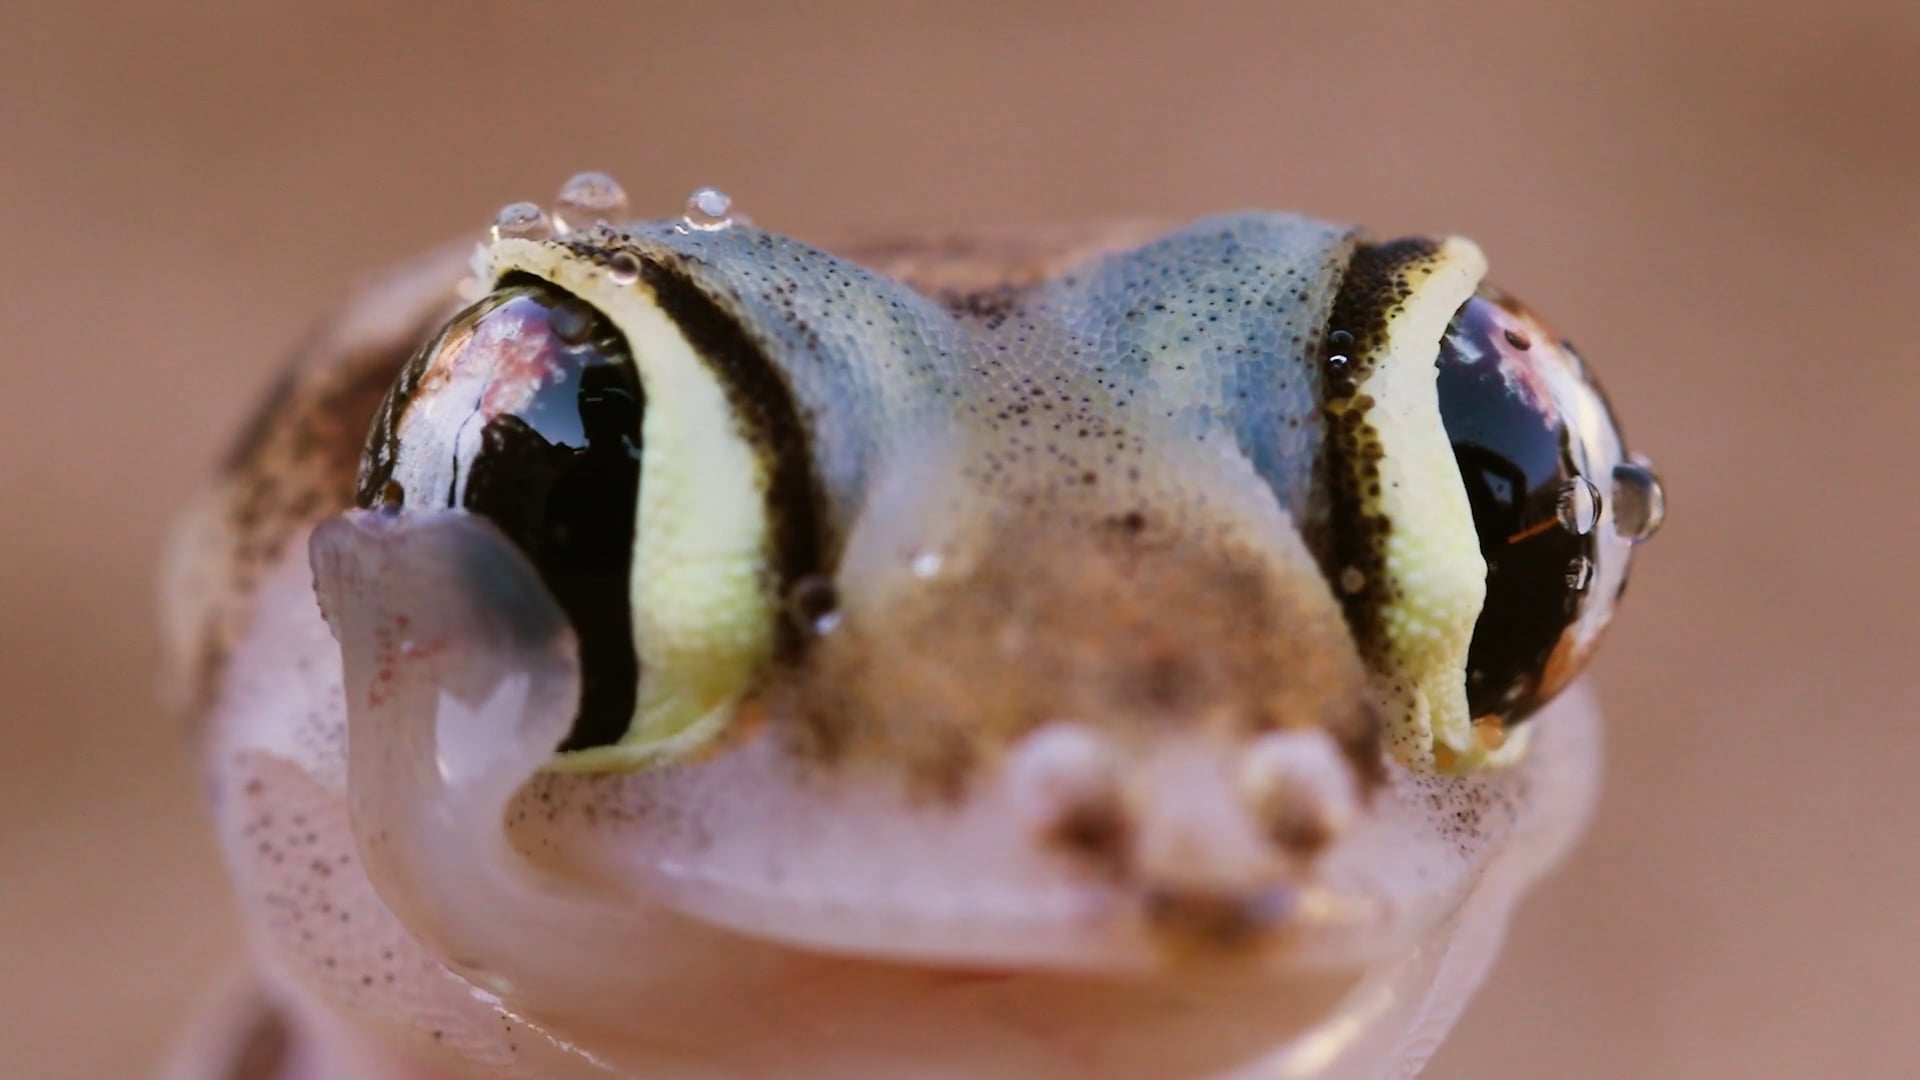 Gecko lick eyes